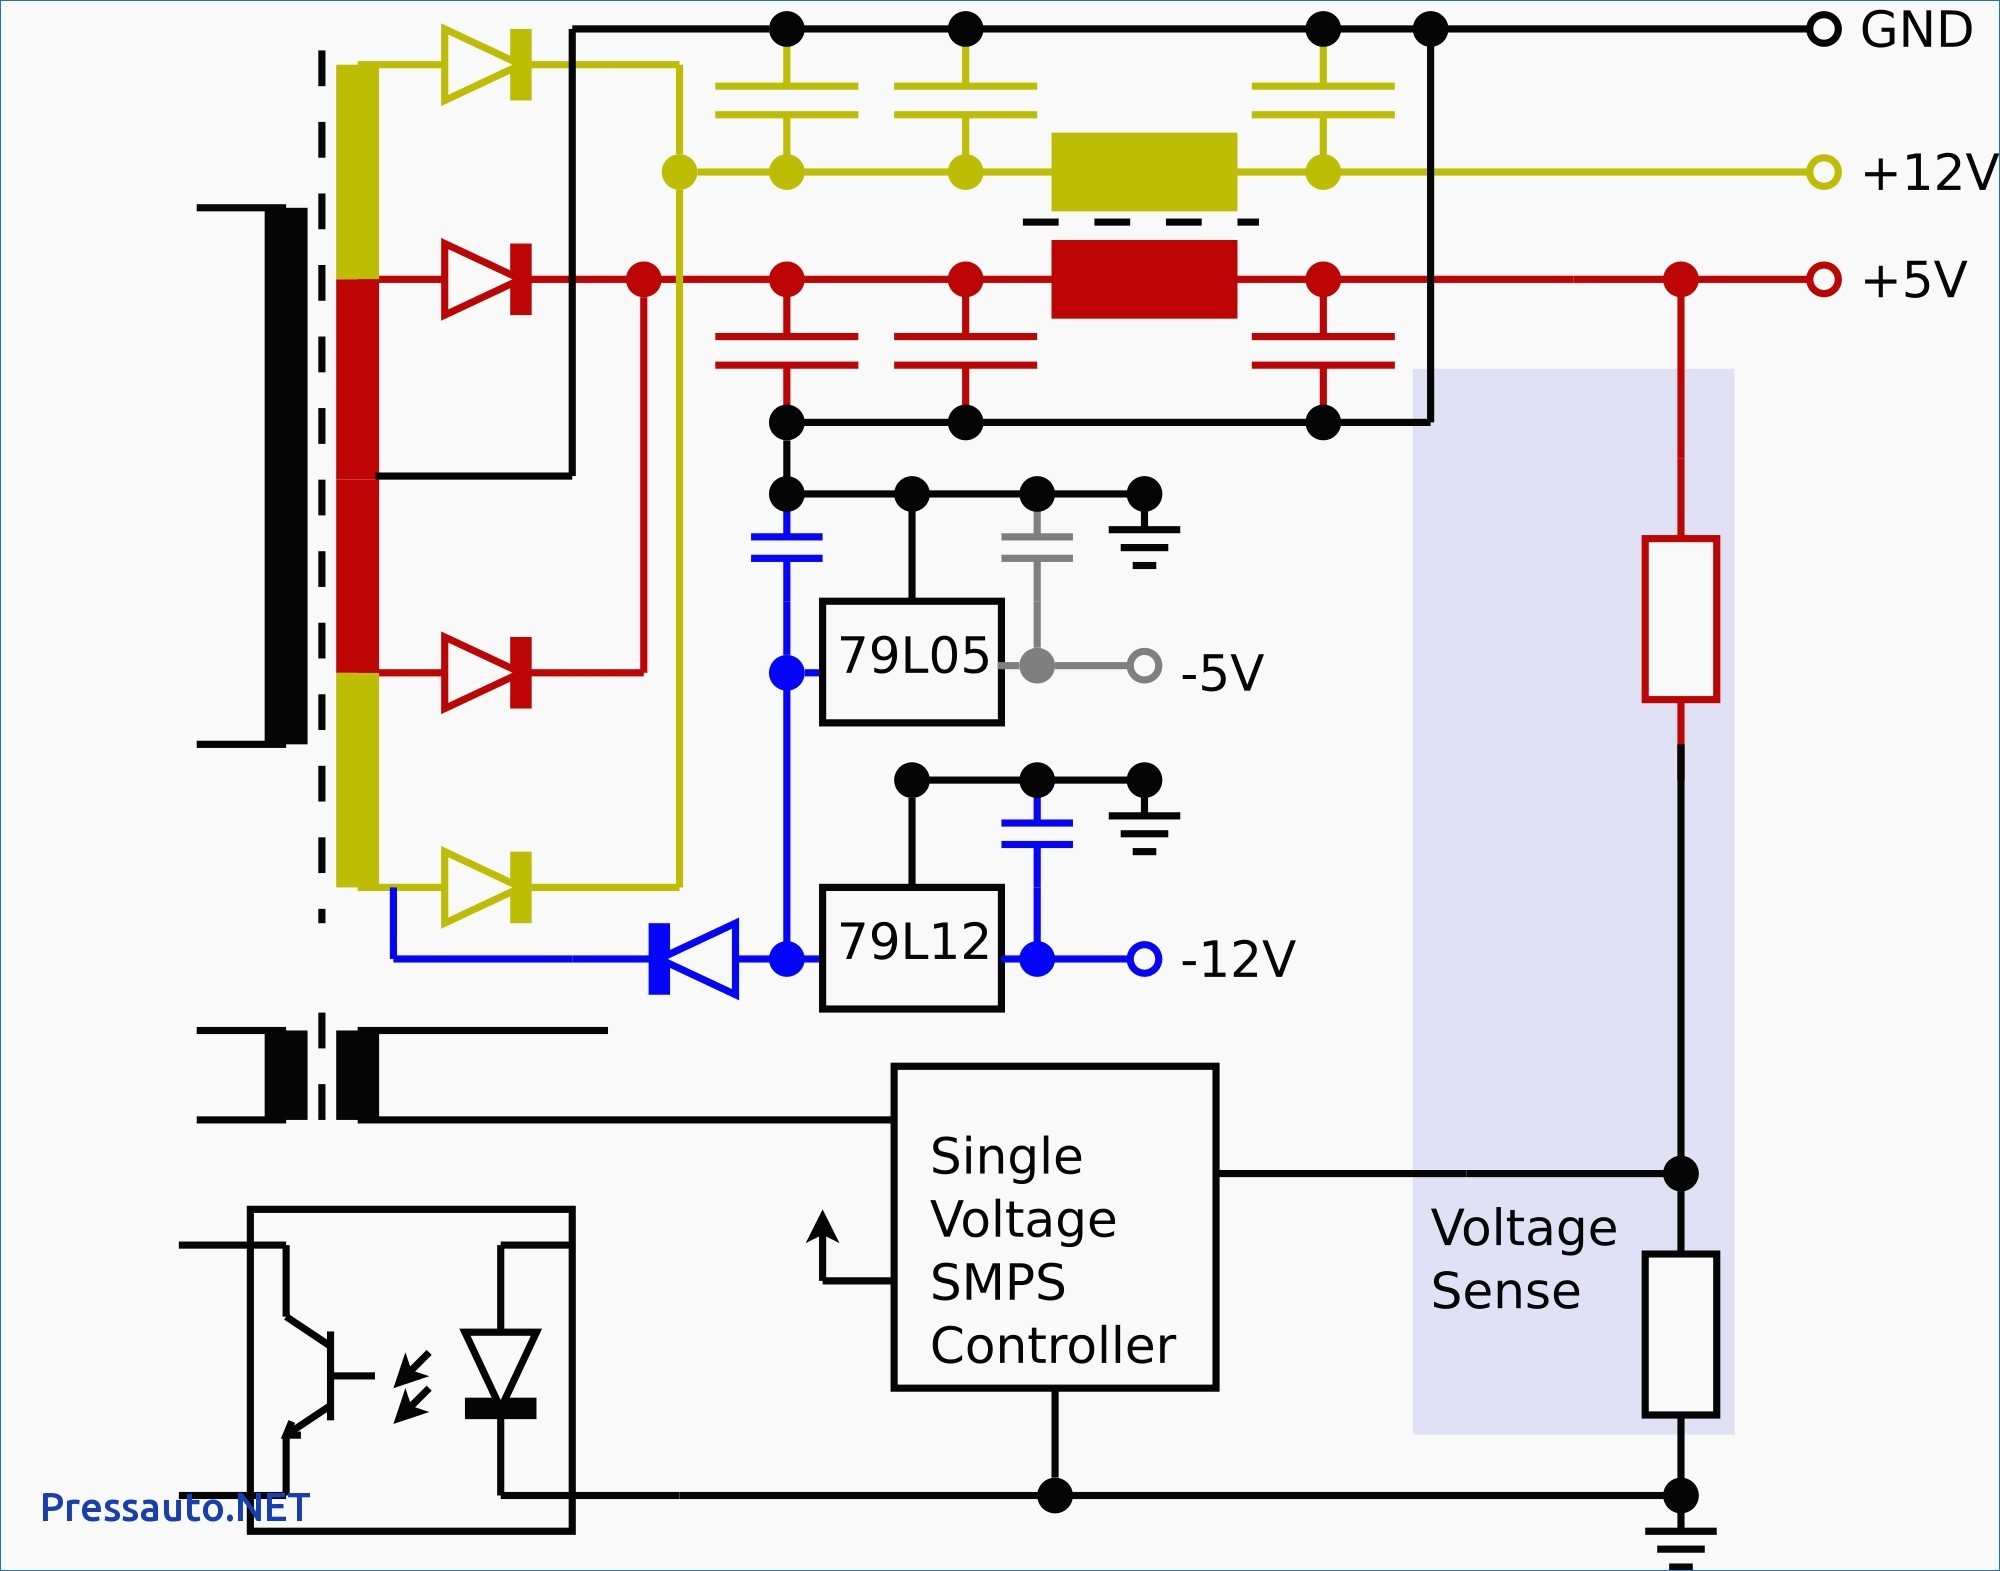 480v to 120v Transformer Wiring Diagram Wiring Control Power Transformer for Motor Circuits Eep Of 480v to 120v Transformer Wiring Diagram